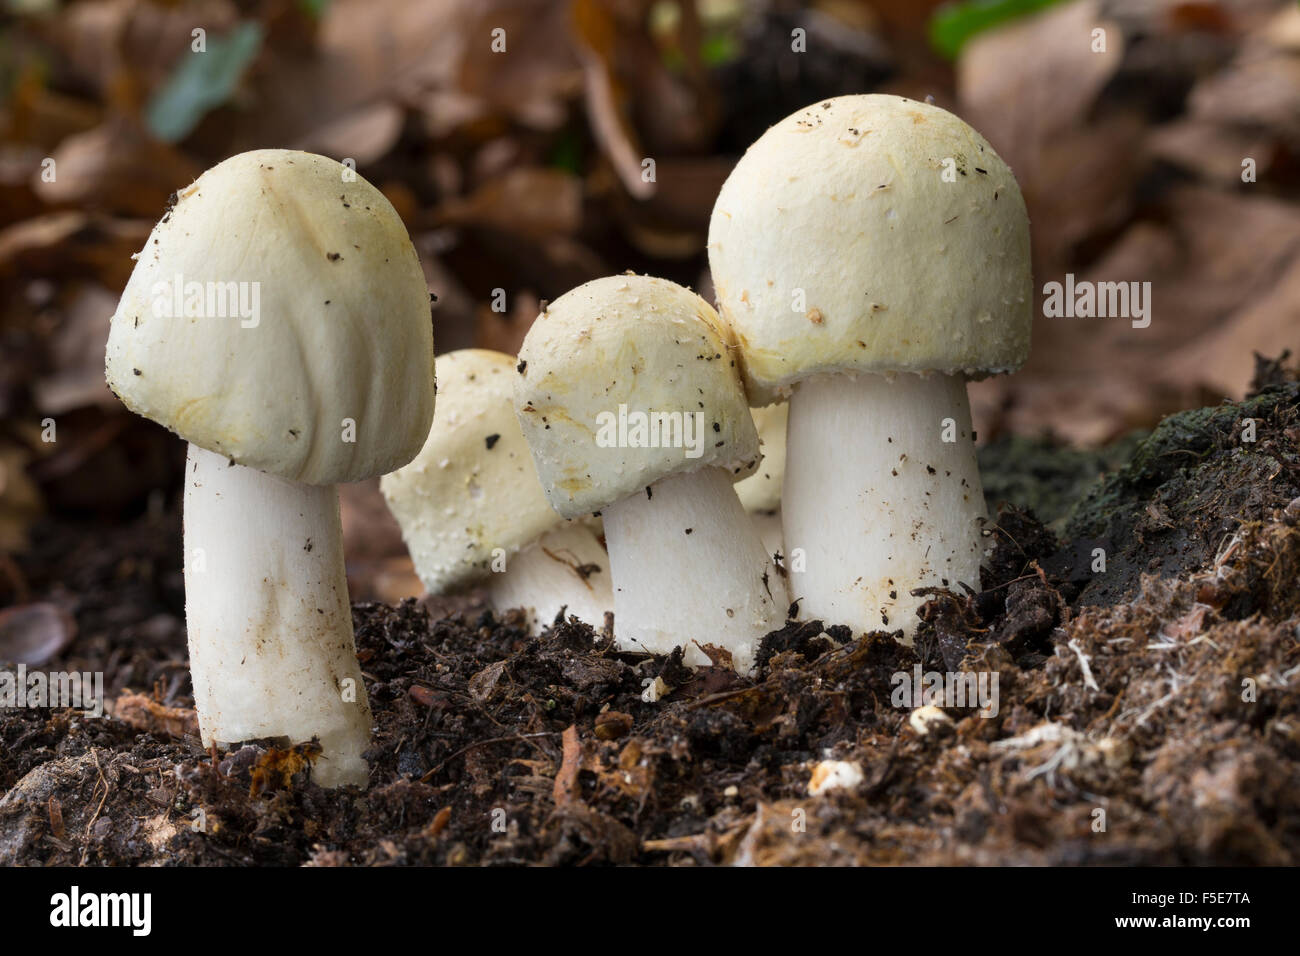 Horse mushroom, Schaf-Champignon, Schafchampignon, Anischampignon, Champignons, Agaricus arvensis, Psalliota arvensis Stock Photo